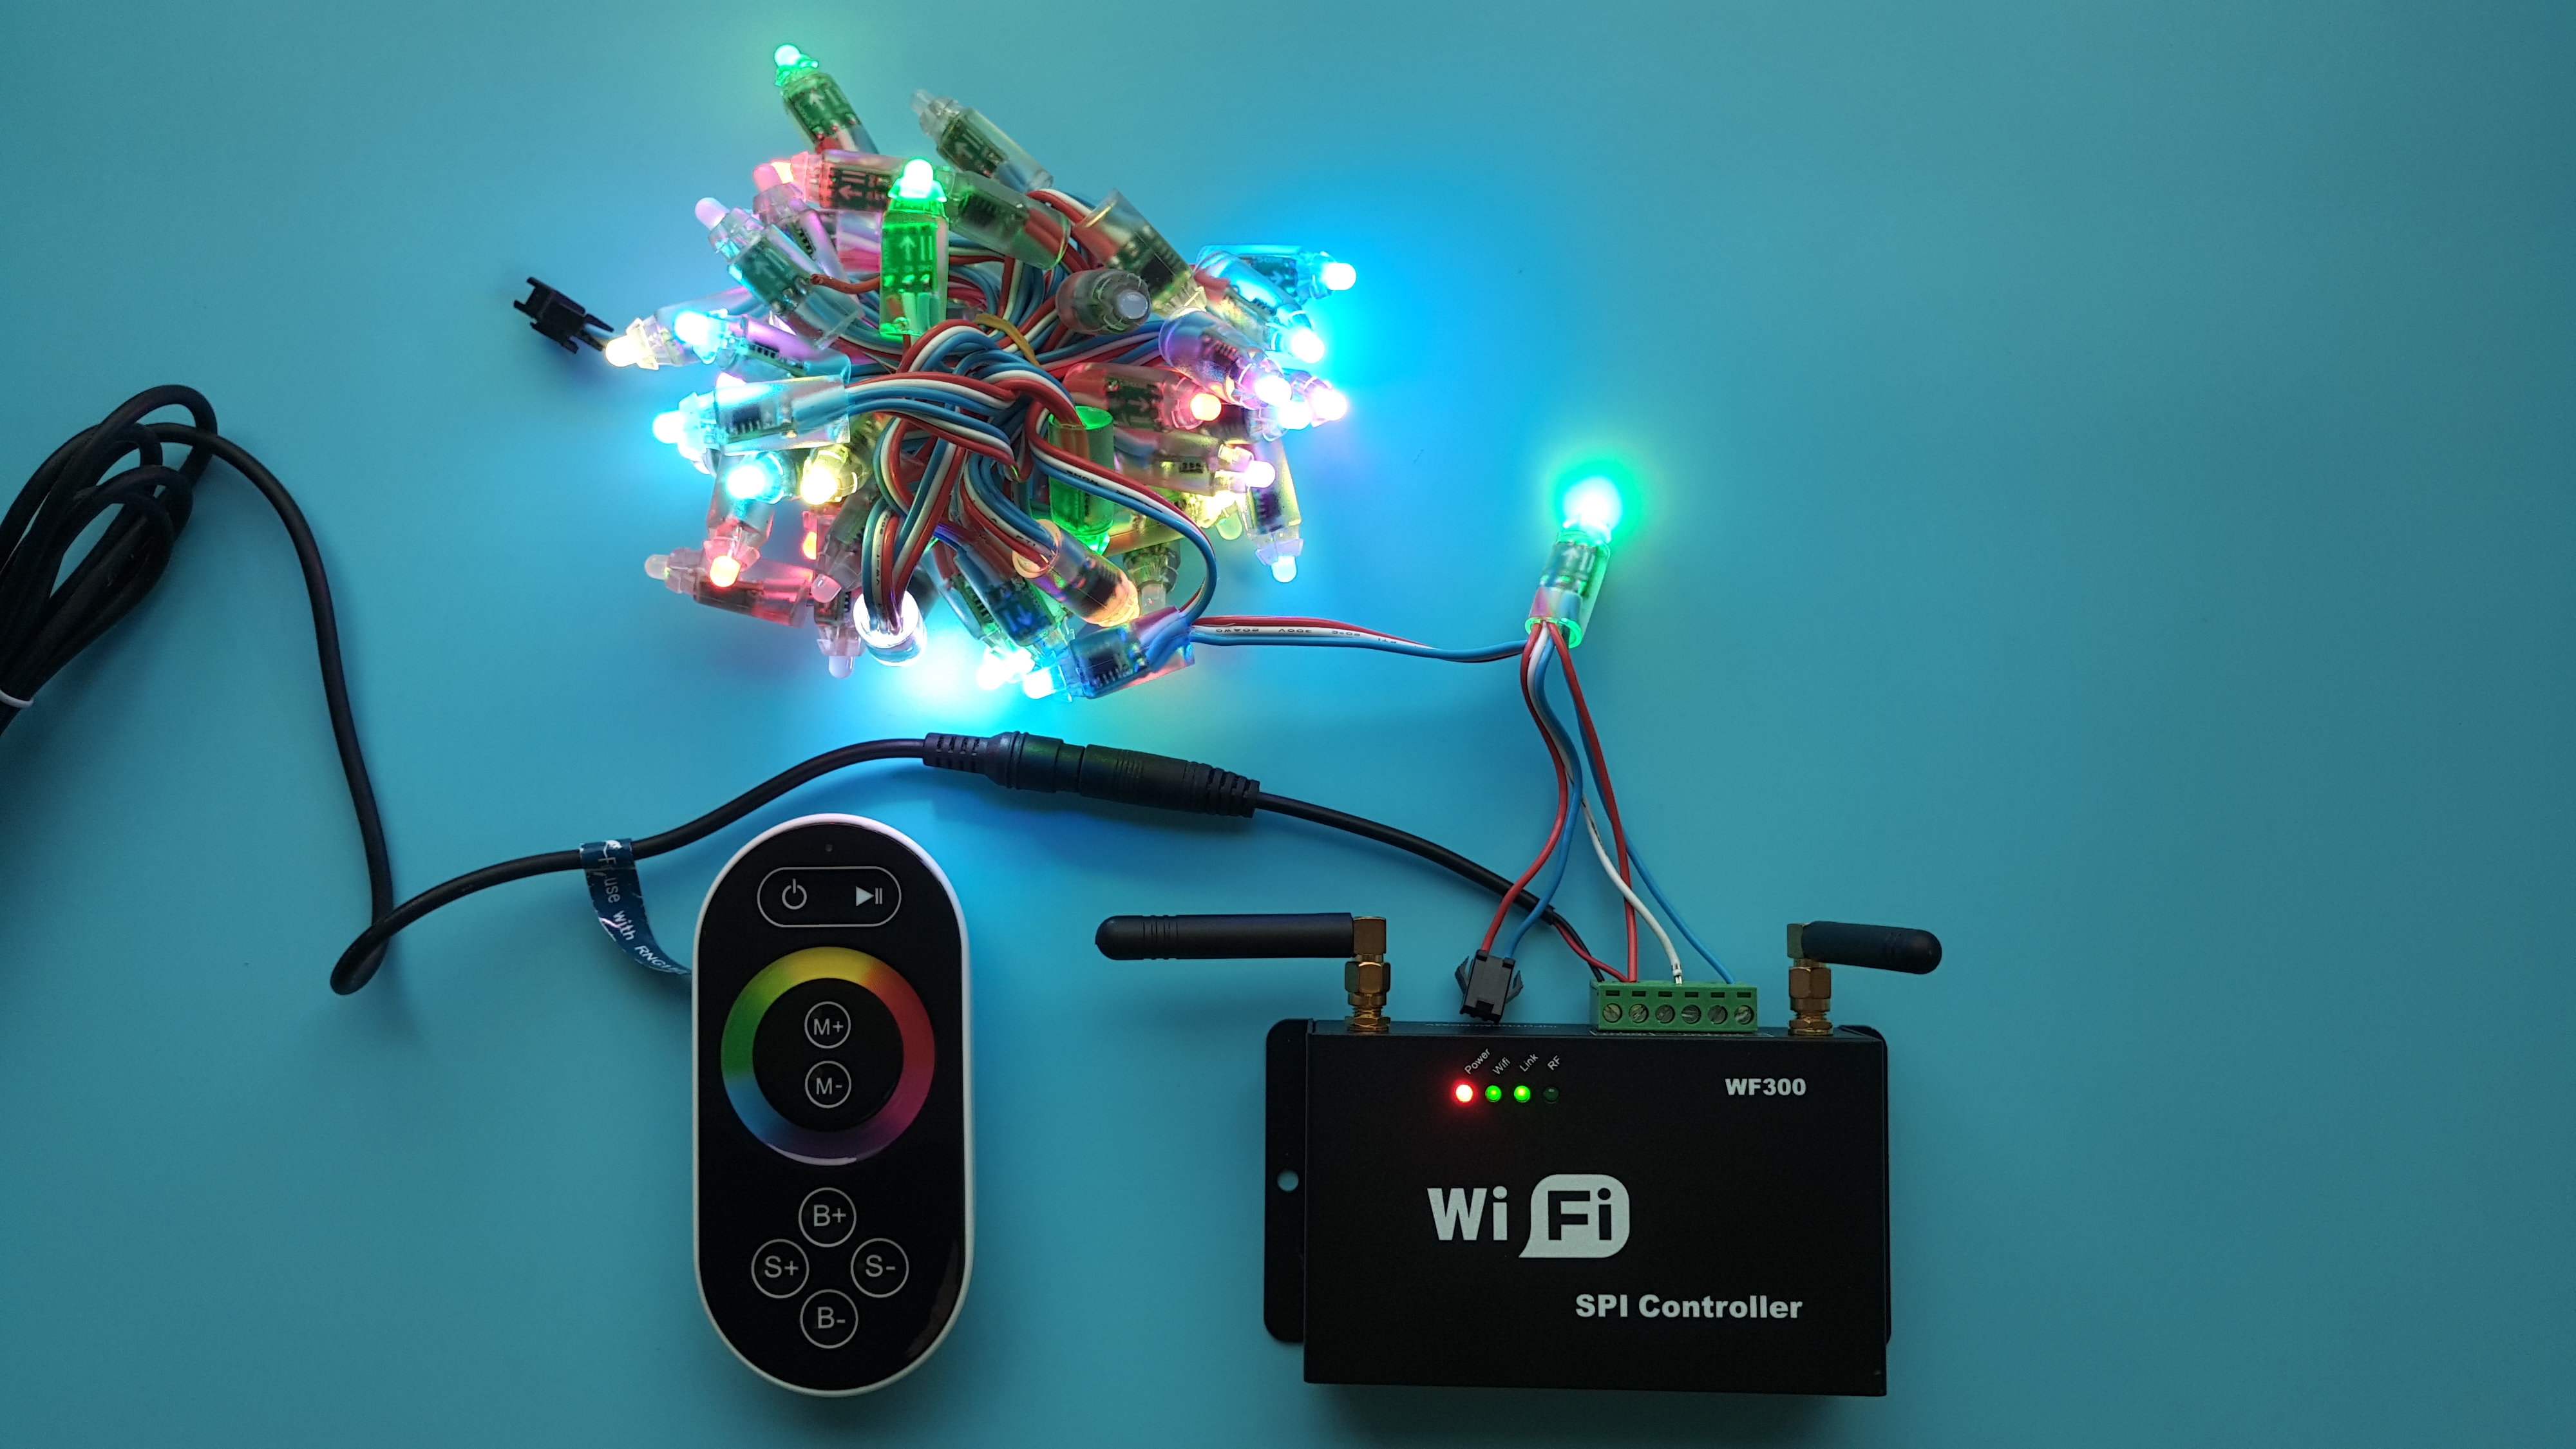 9mm through-hole WS2811 RGB LED pixel node light string and WF300 SPI RGB LED controller